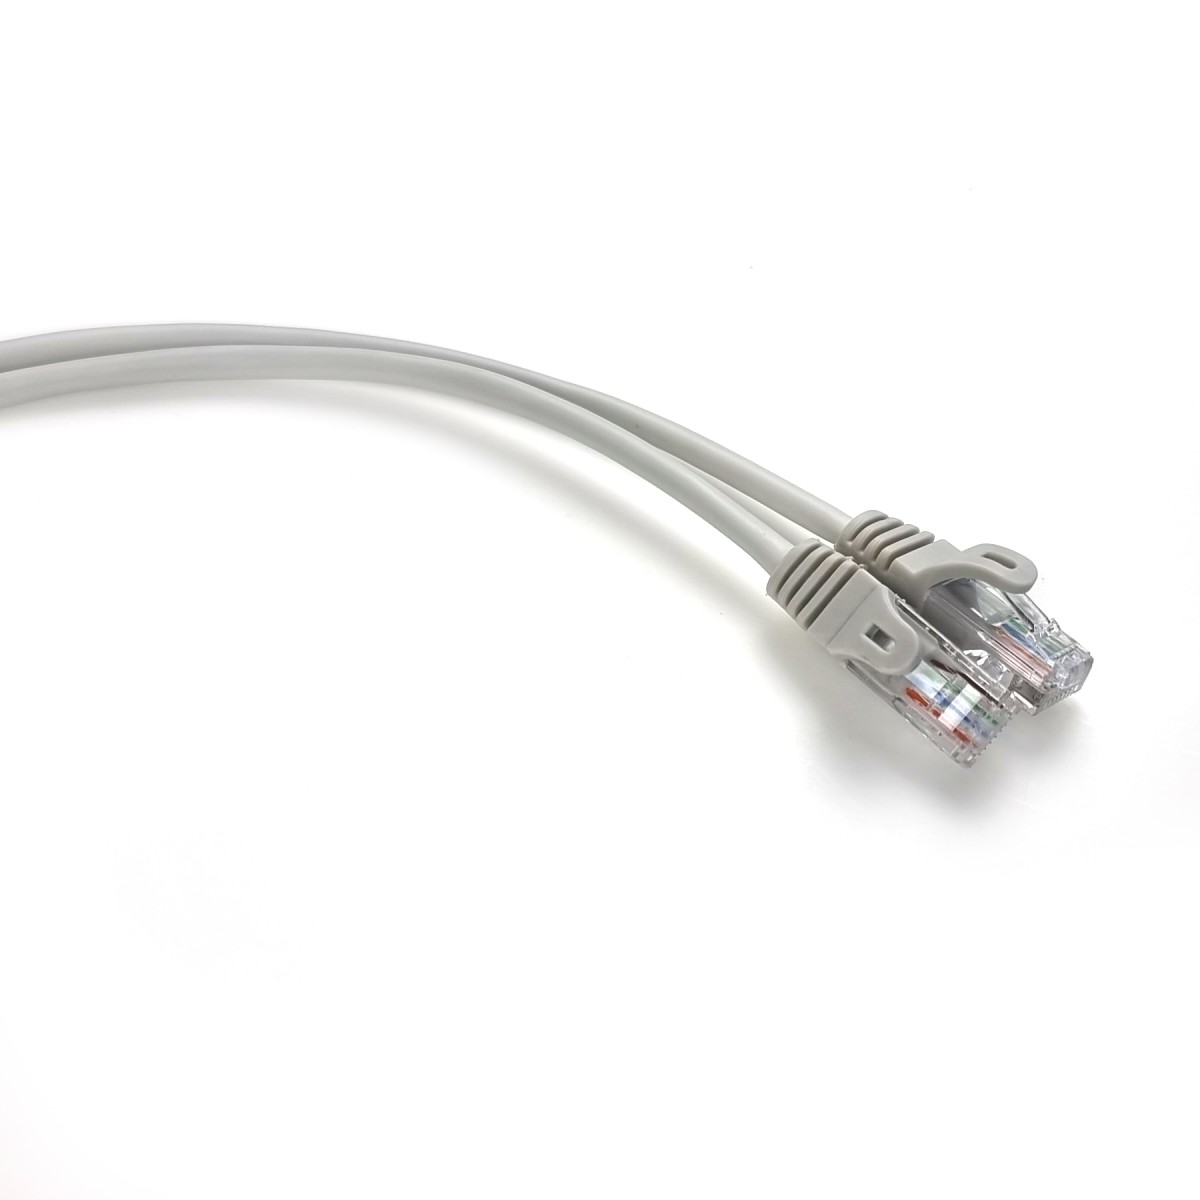 Интернет кабель 1,5м UTP литой серый RJ45 кат. 5е 256_256.jpg